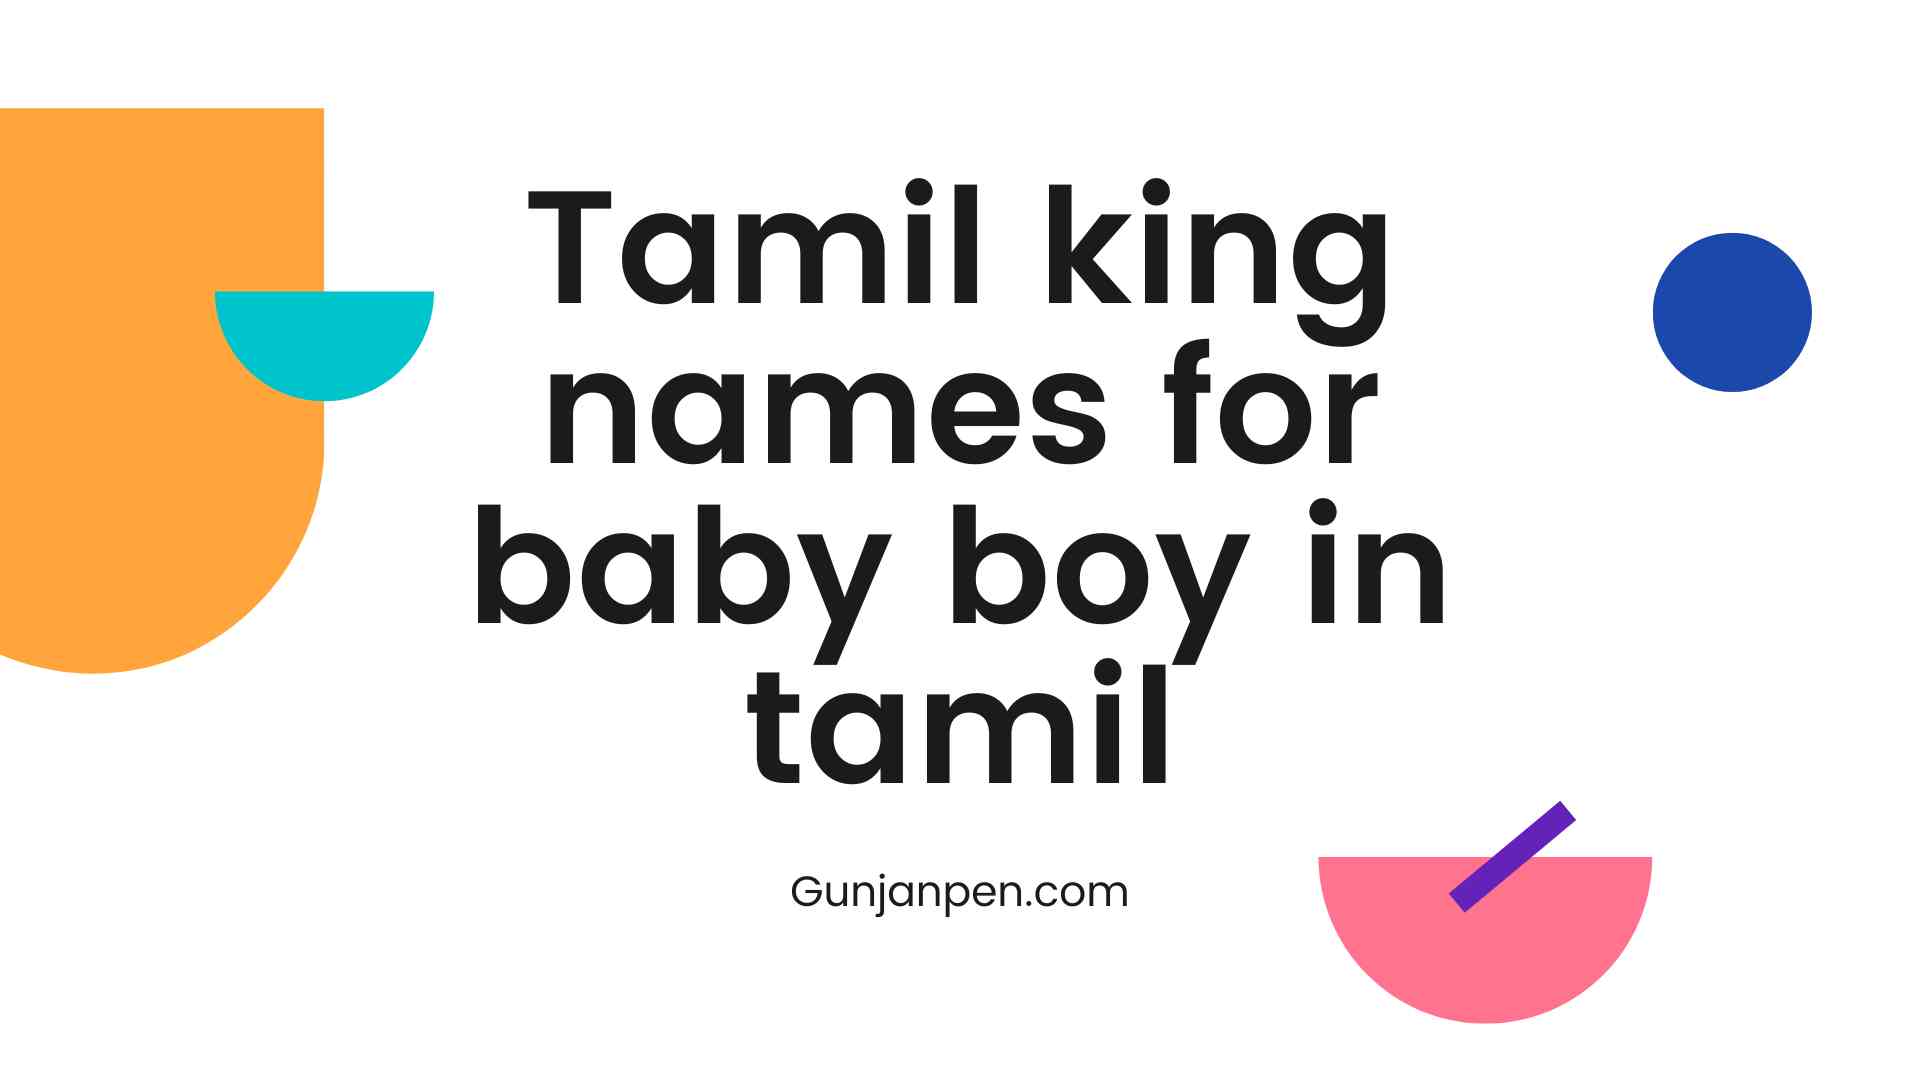 Tamil king names for baby boy in tamil